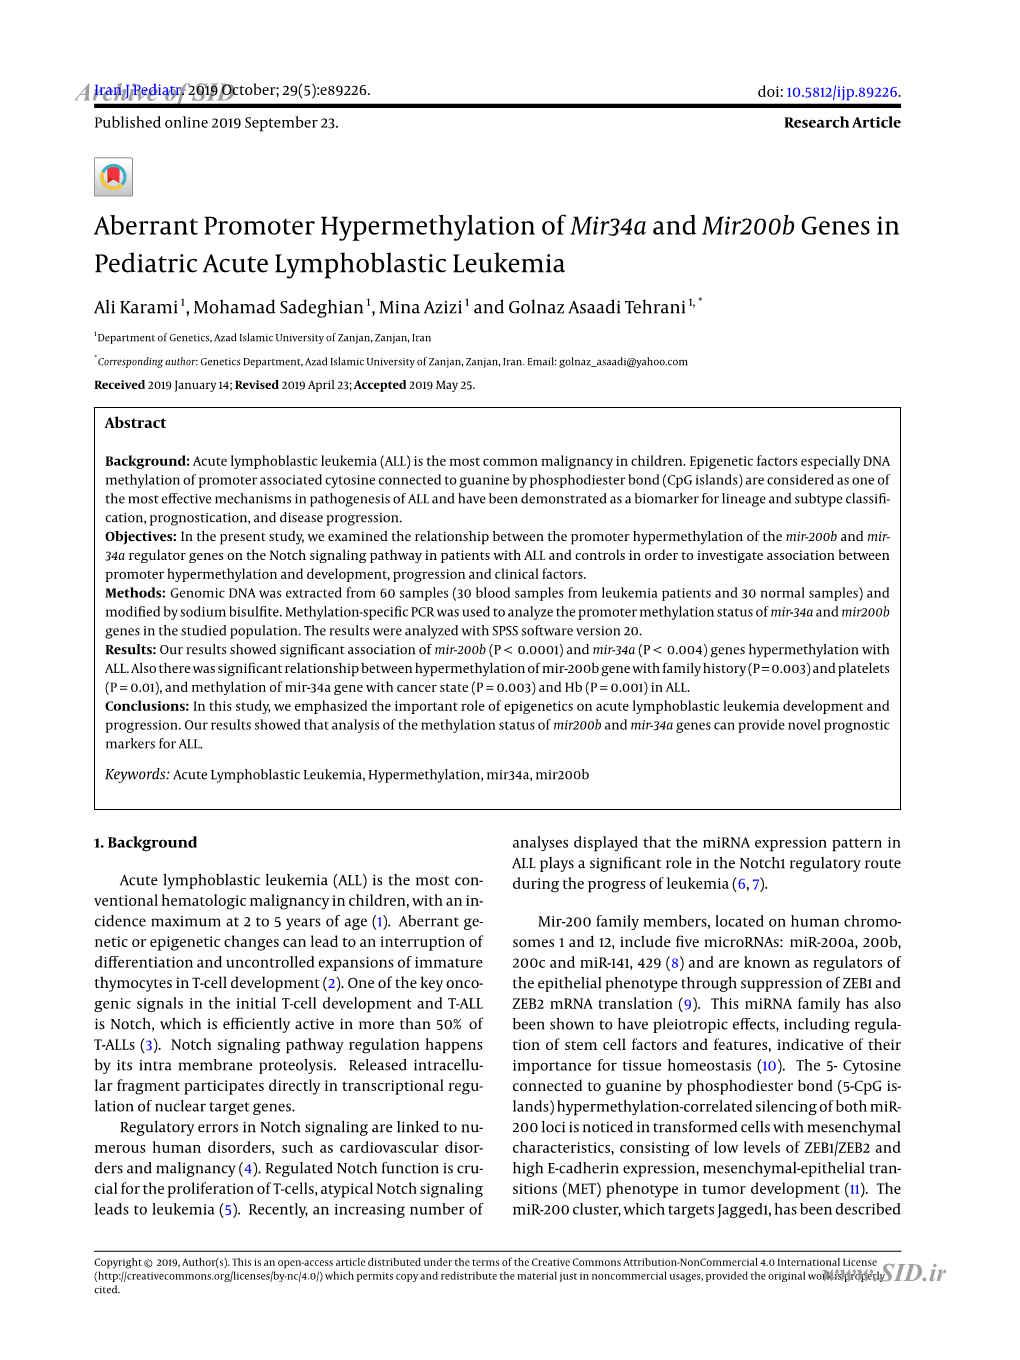 Aberrant Promoter Hypermethylation of Mir34a and Mir200b Genes in Pediatric Acute Lymphoblastic Leukemia